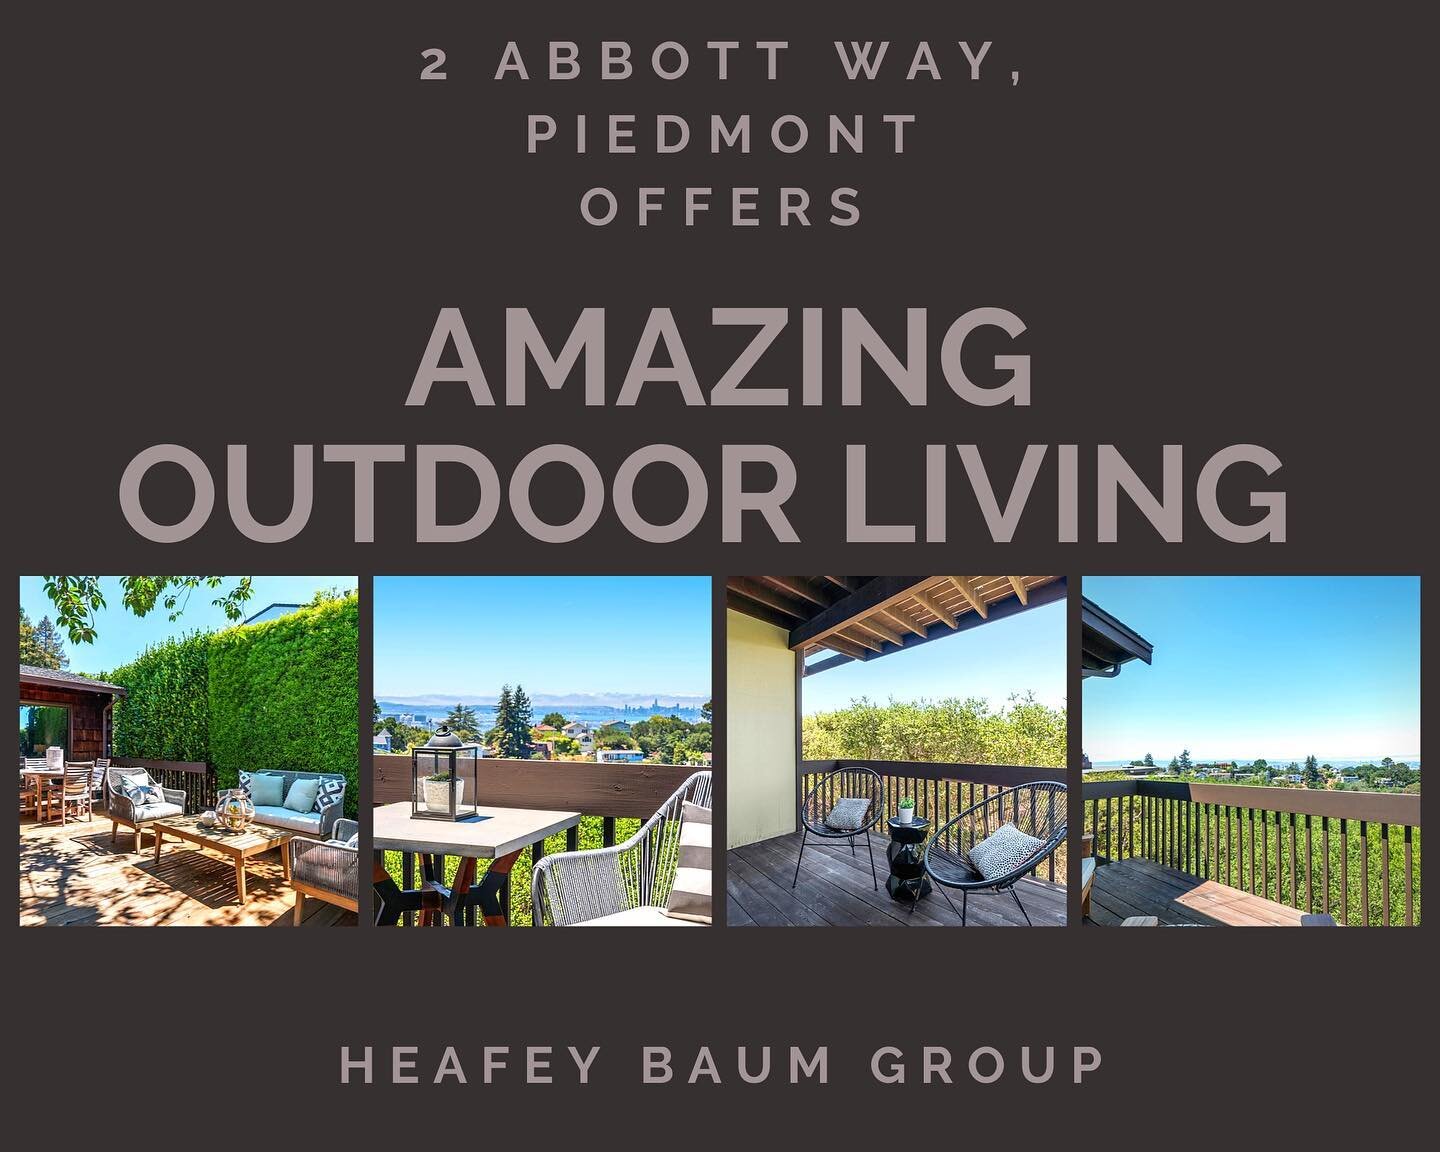 2 Abbott Way, Piedmont offers amazing outdoor living! Open Sun 2-4:30 accepting offers 7/21!
.
.
.
#outdoorliving #piedmontrealestate #views #compassrealestate #heafeybaumgroup